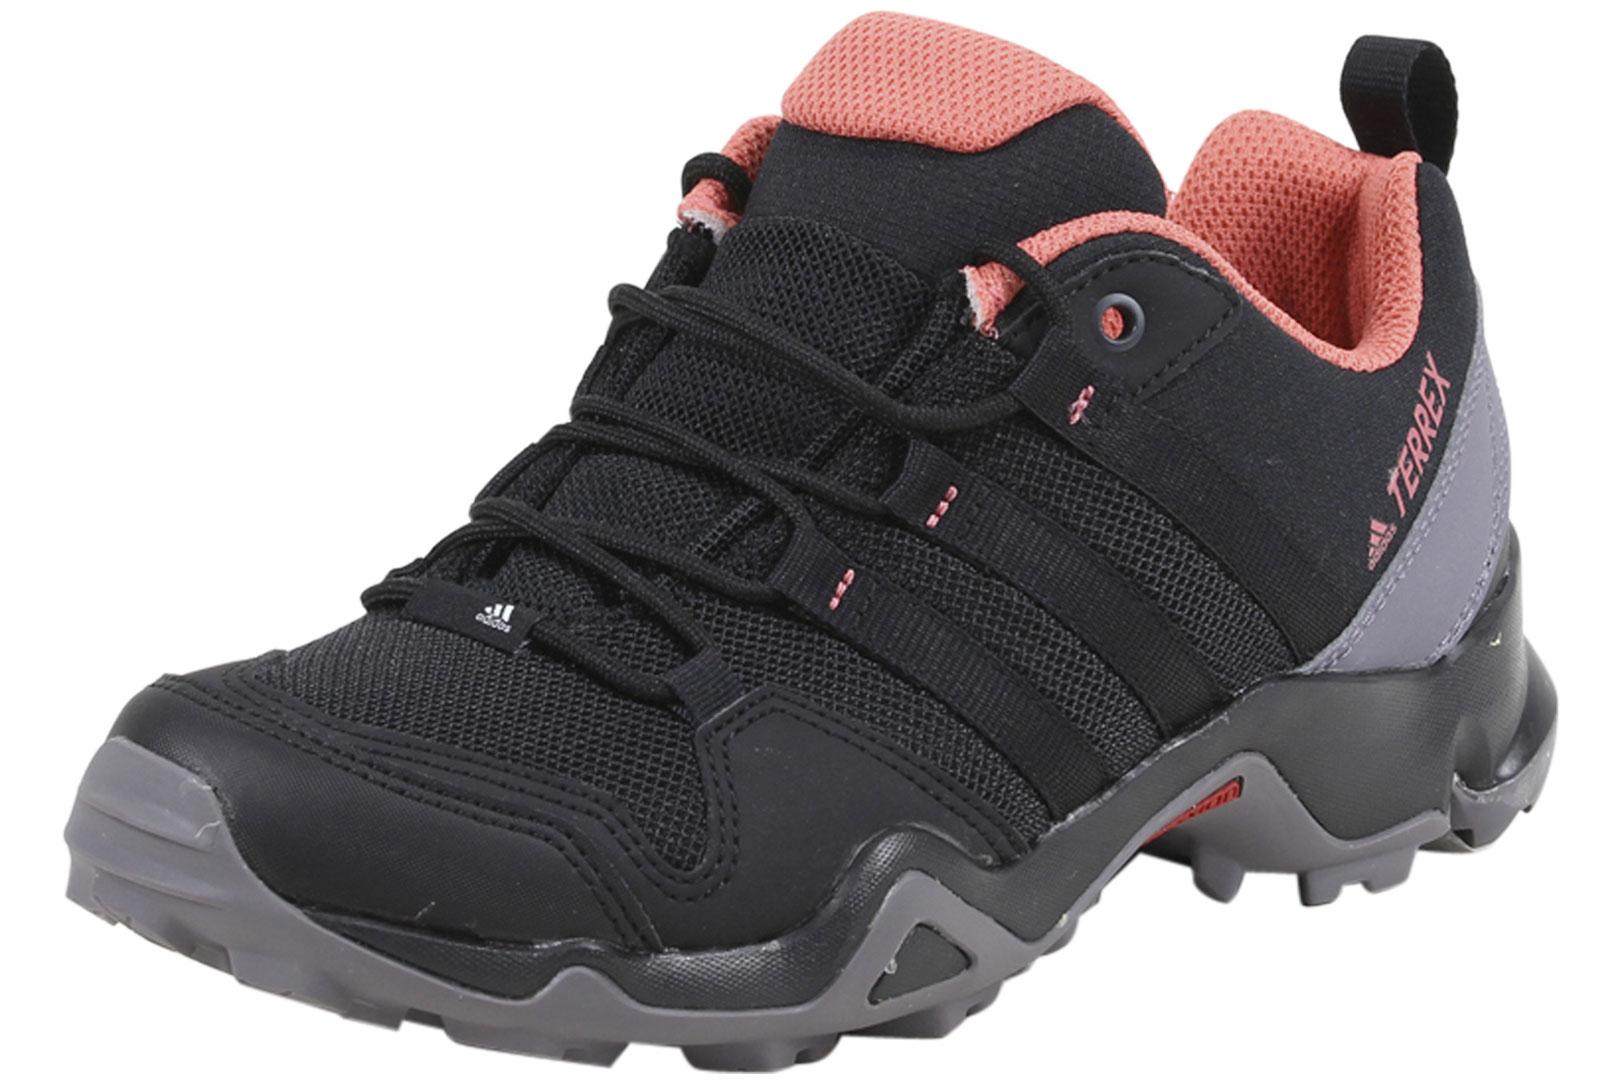 adidas women's terrex ax2r hiking shoes